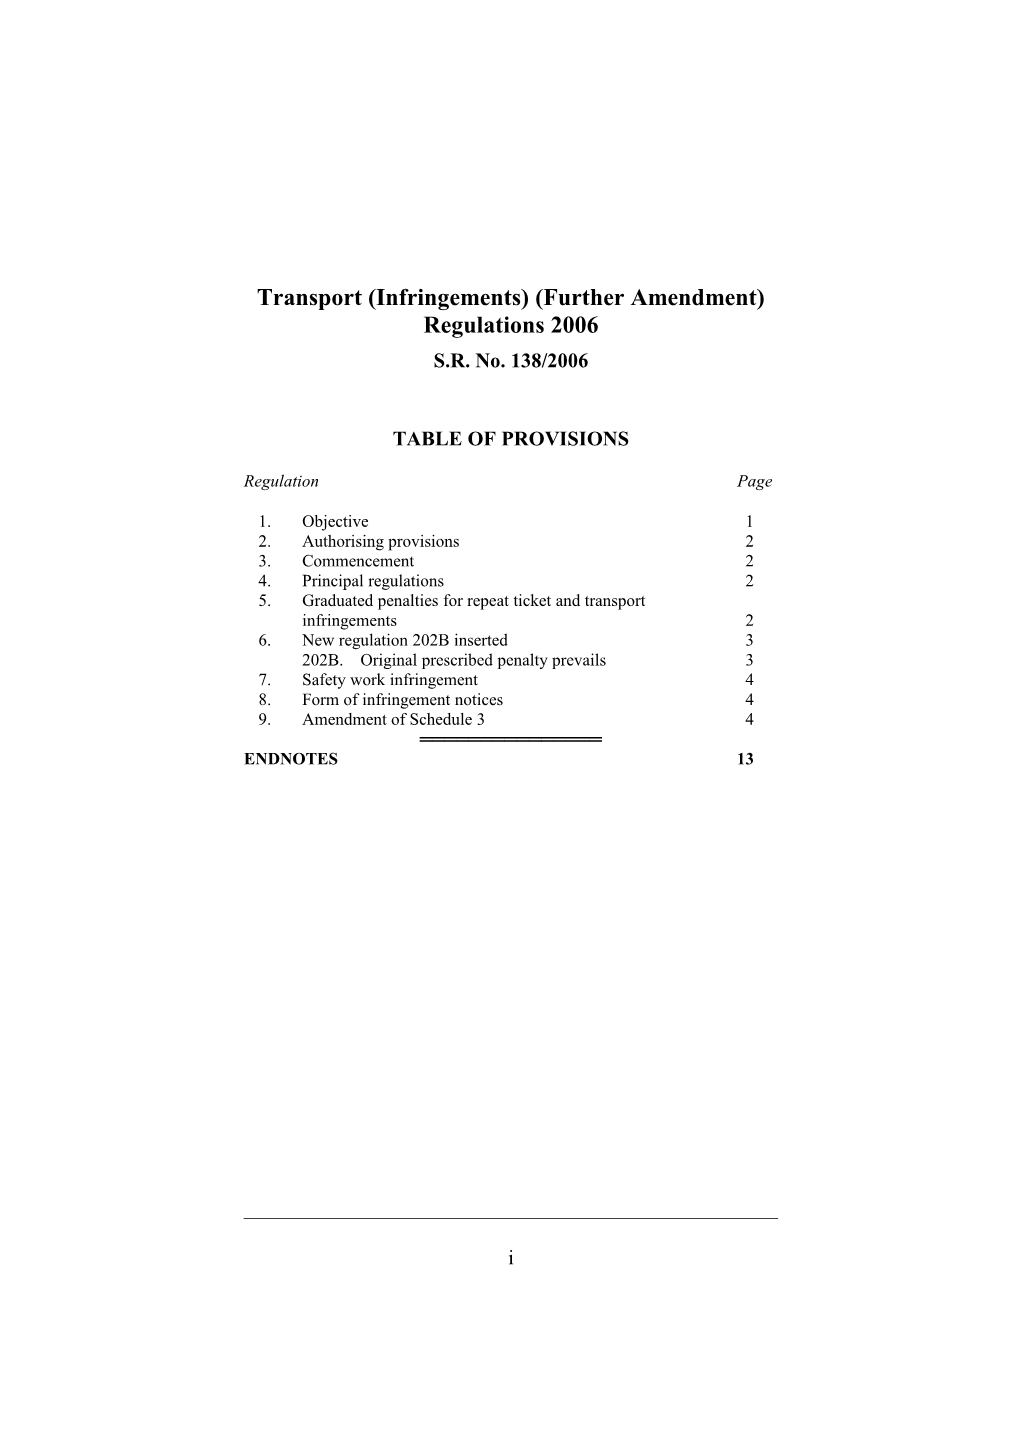 Transport (Infringements) (Further Amendment) Regulations 2006